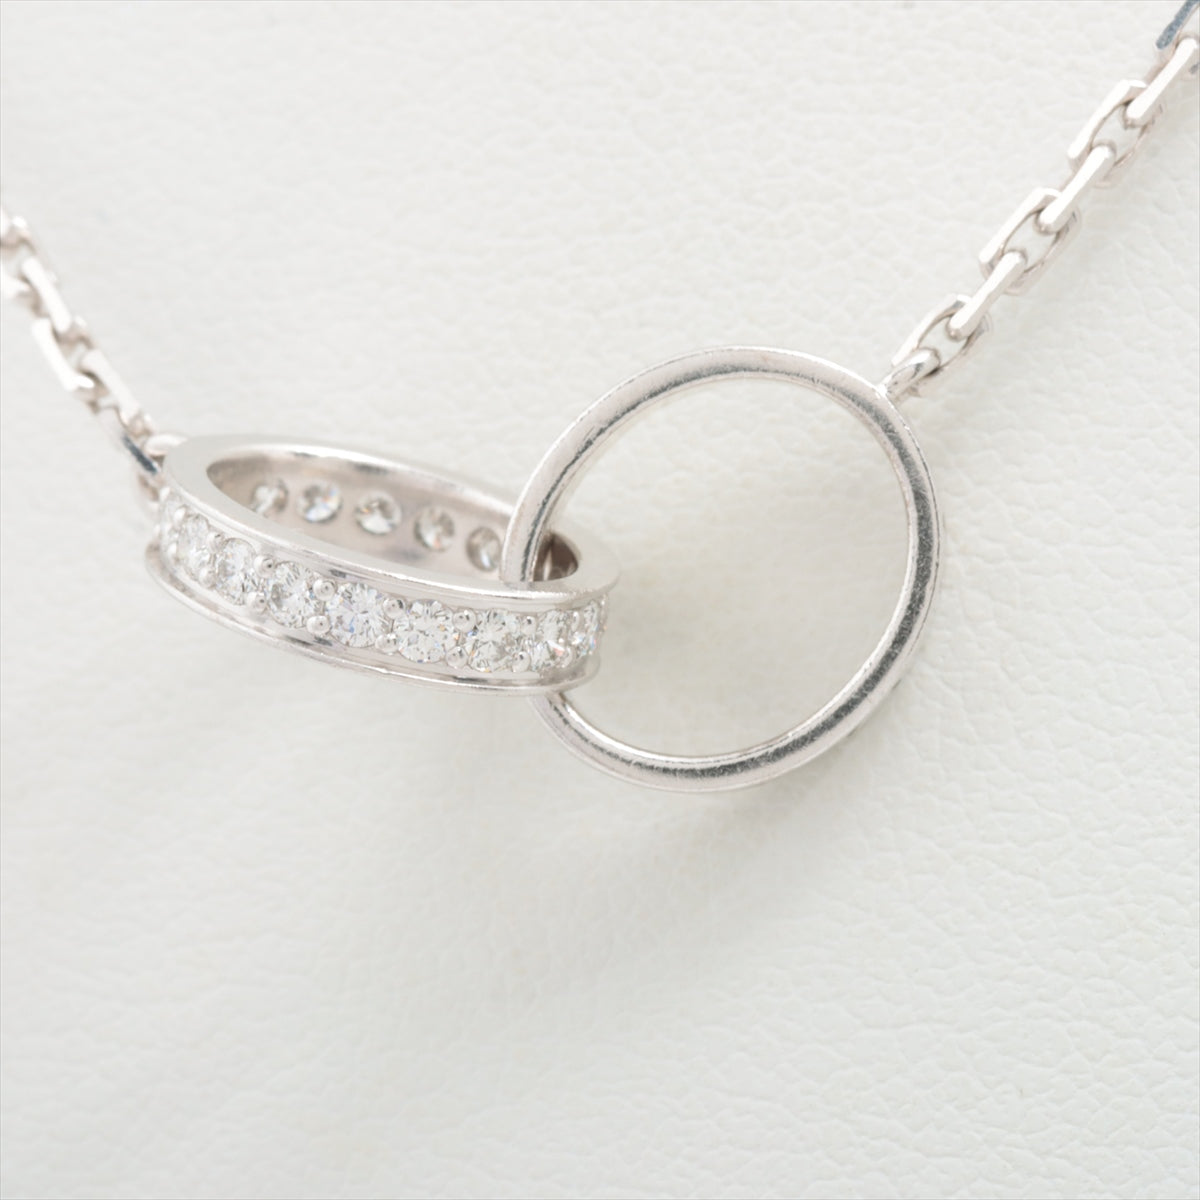 Cartier Baby Love diamond Necklace 750(WG) 6.9g